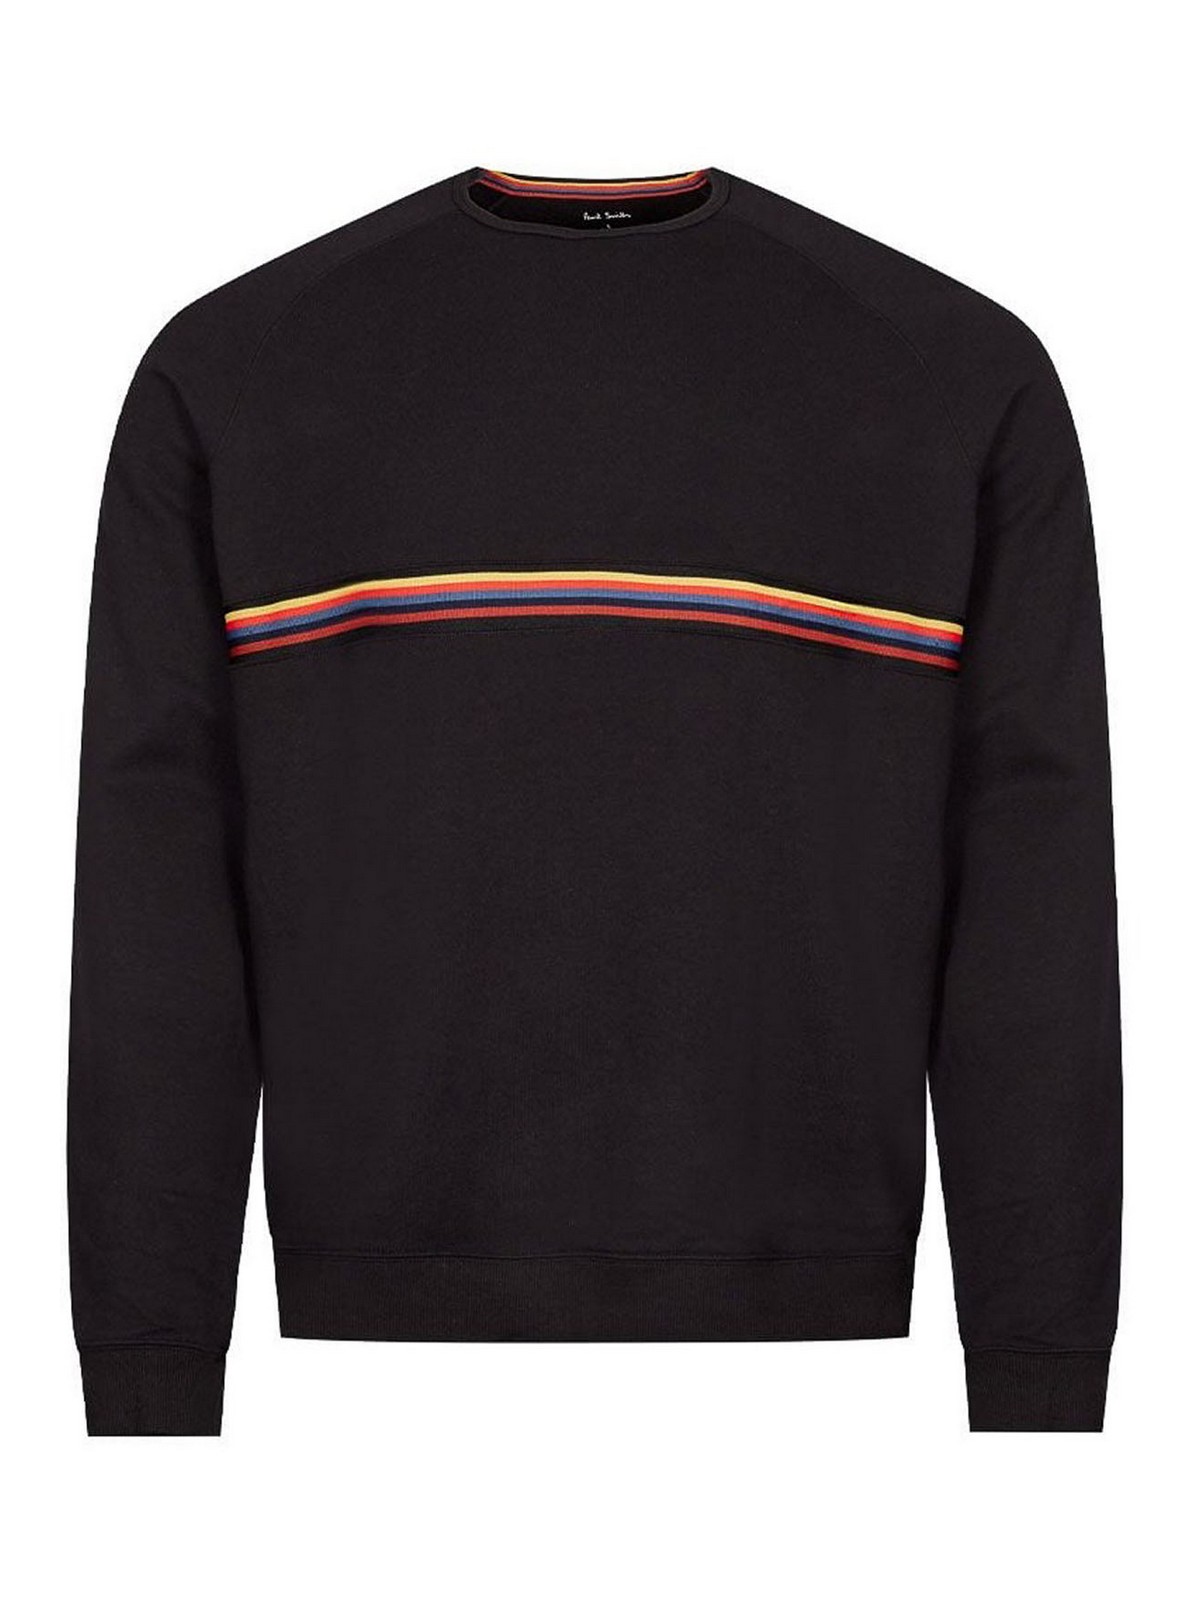 Paul Smith Striped Band Sweatshirt In Black